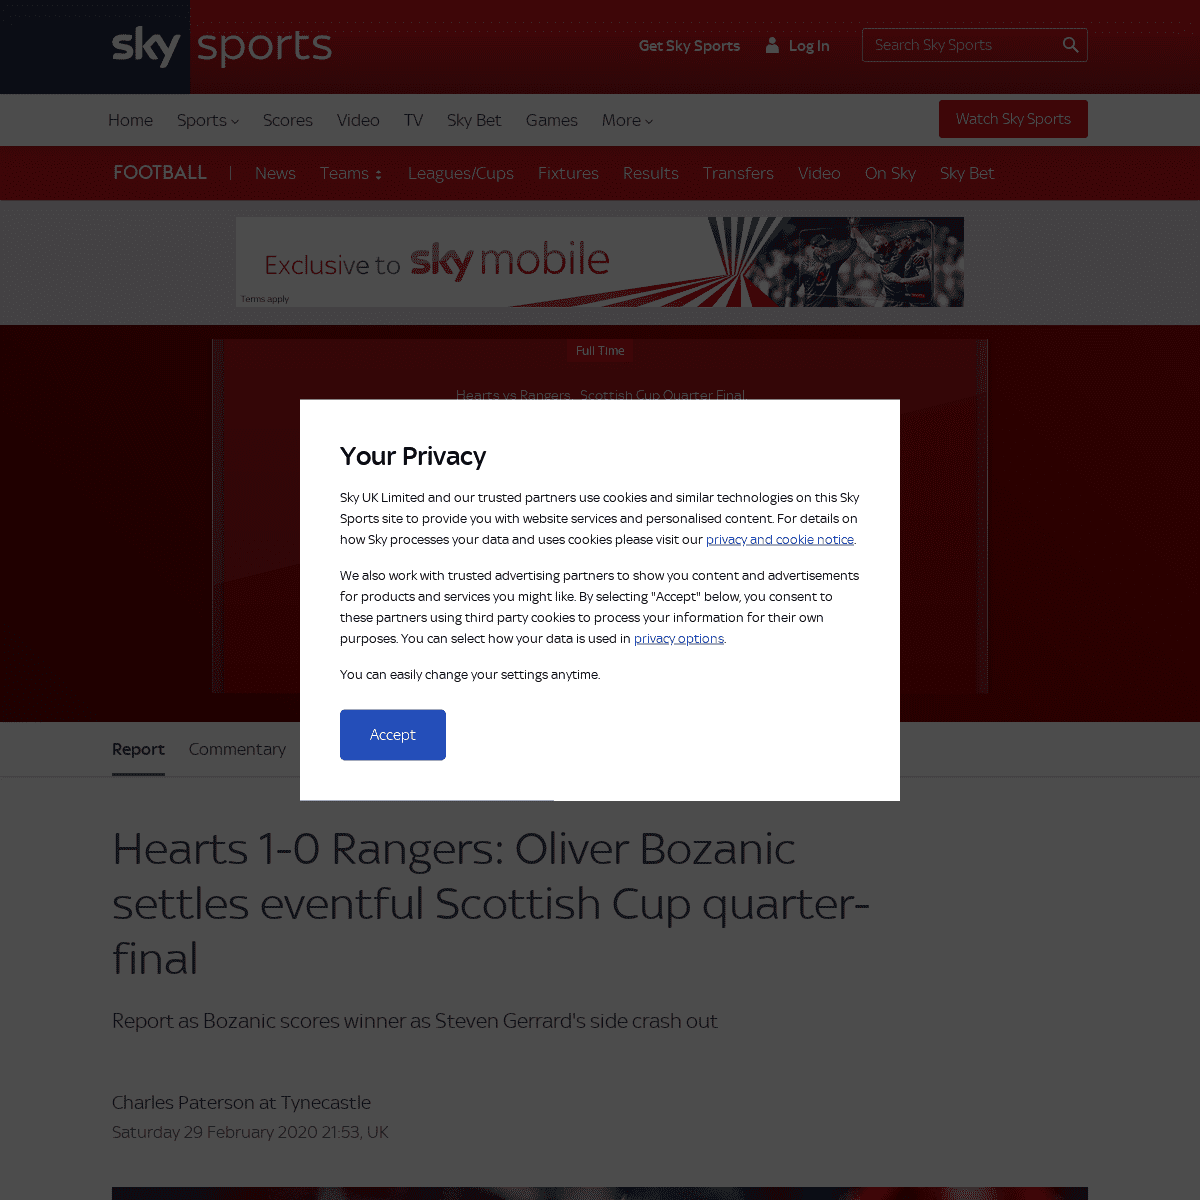 A complete backup of www.skysports.com/football/hearts-vs-rangers/report/423735